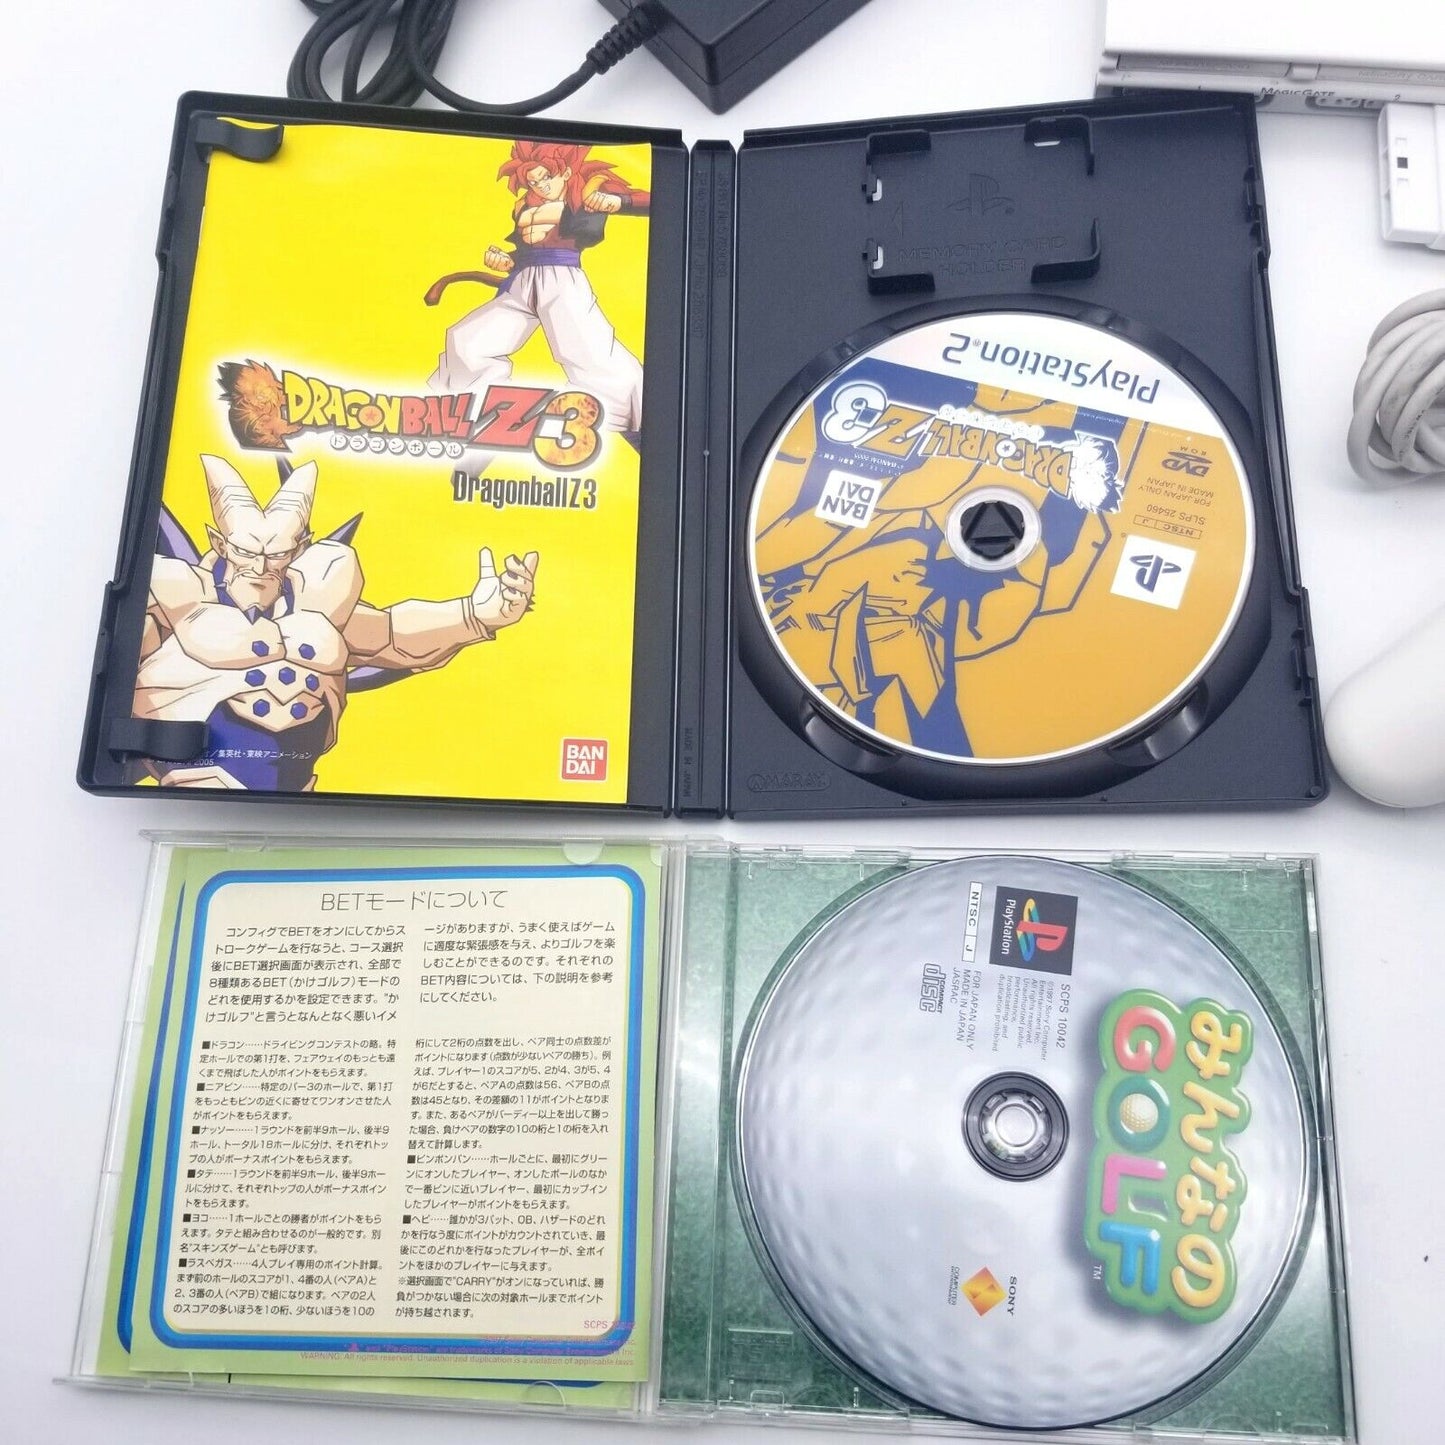 SCPH-75000 Sony PlayStation 2 PS2 SLIM White Console Japanese NTSC-J w/ 3 Bonus